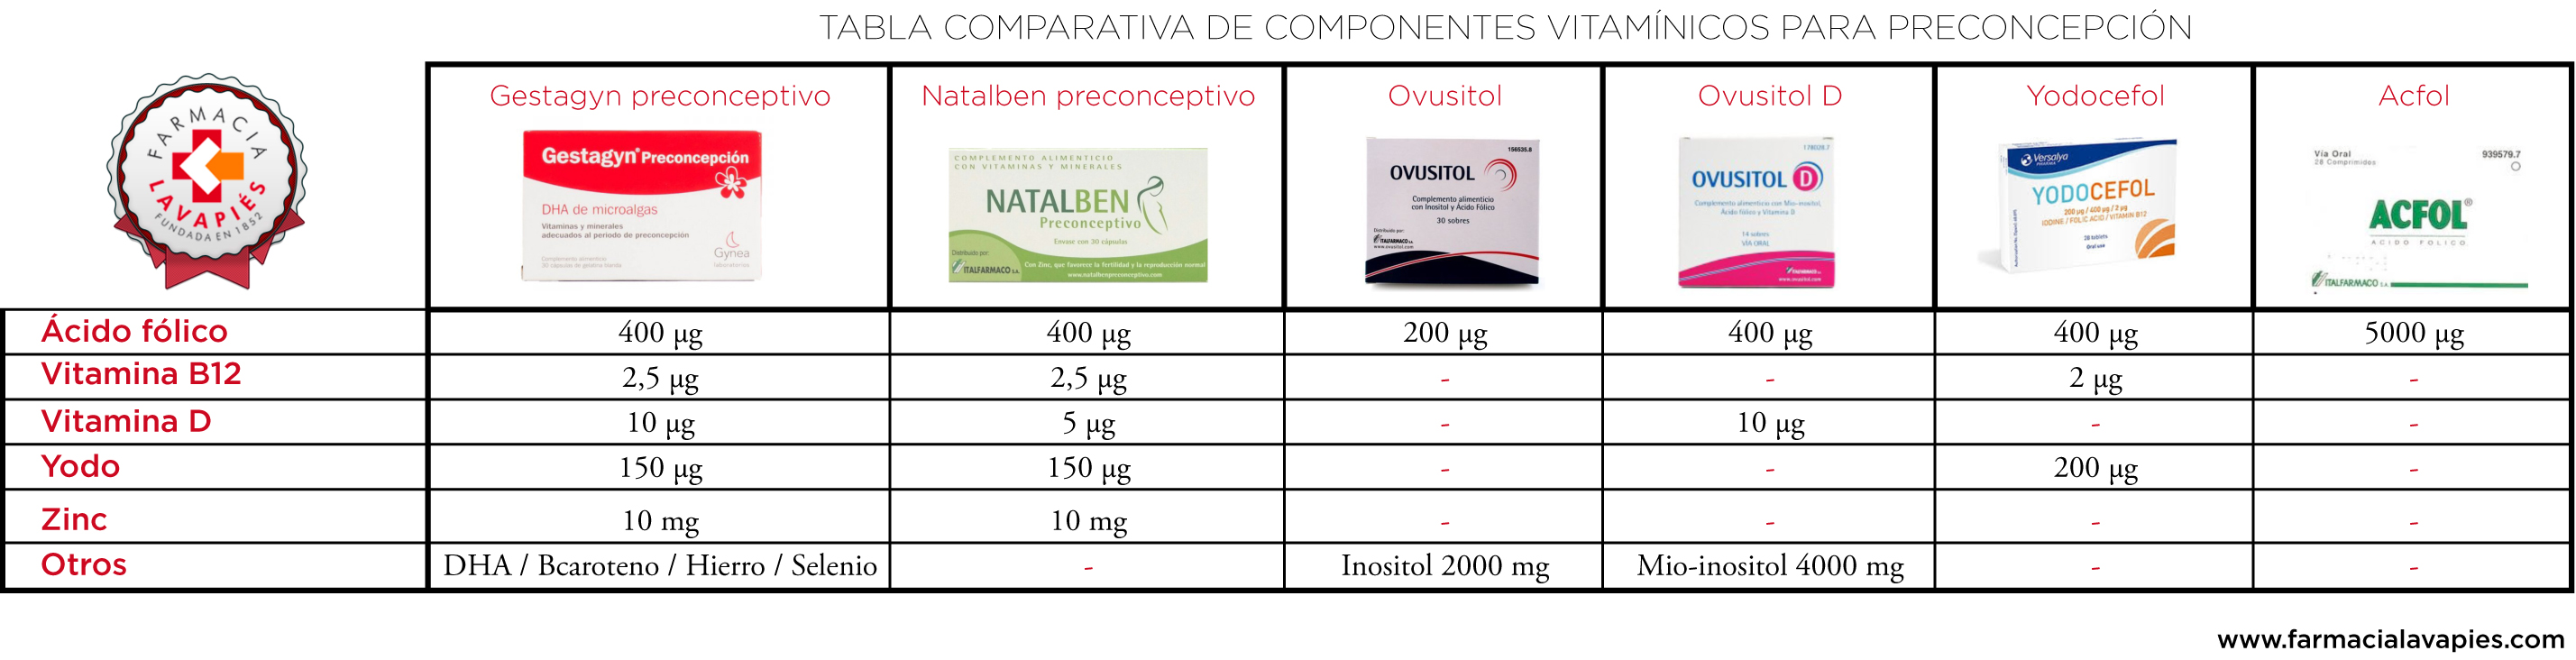 https://www.farmacialavapies.com/wp-content/uploads/comparativa-complementos-vitaminicos-preconcepcion-farmacia-lavapies.jpg